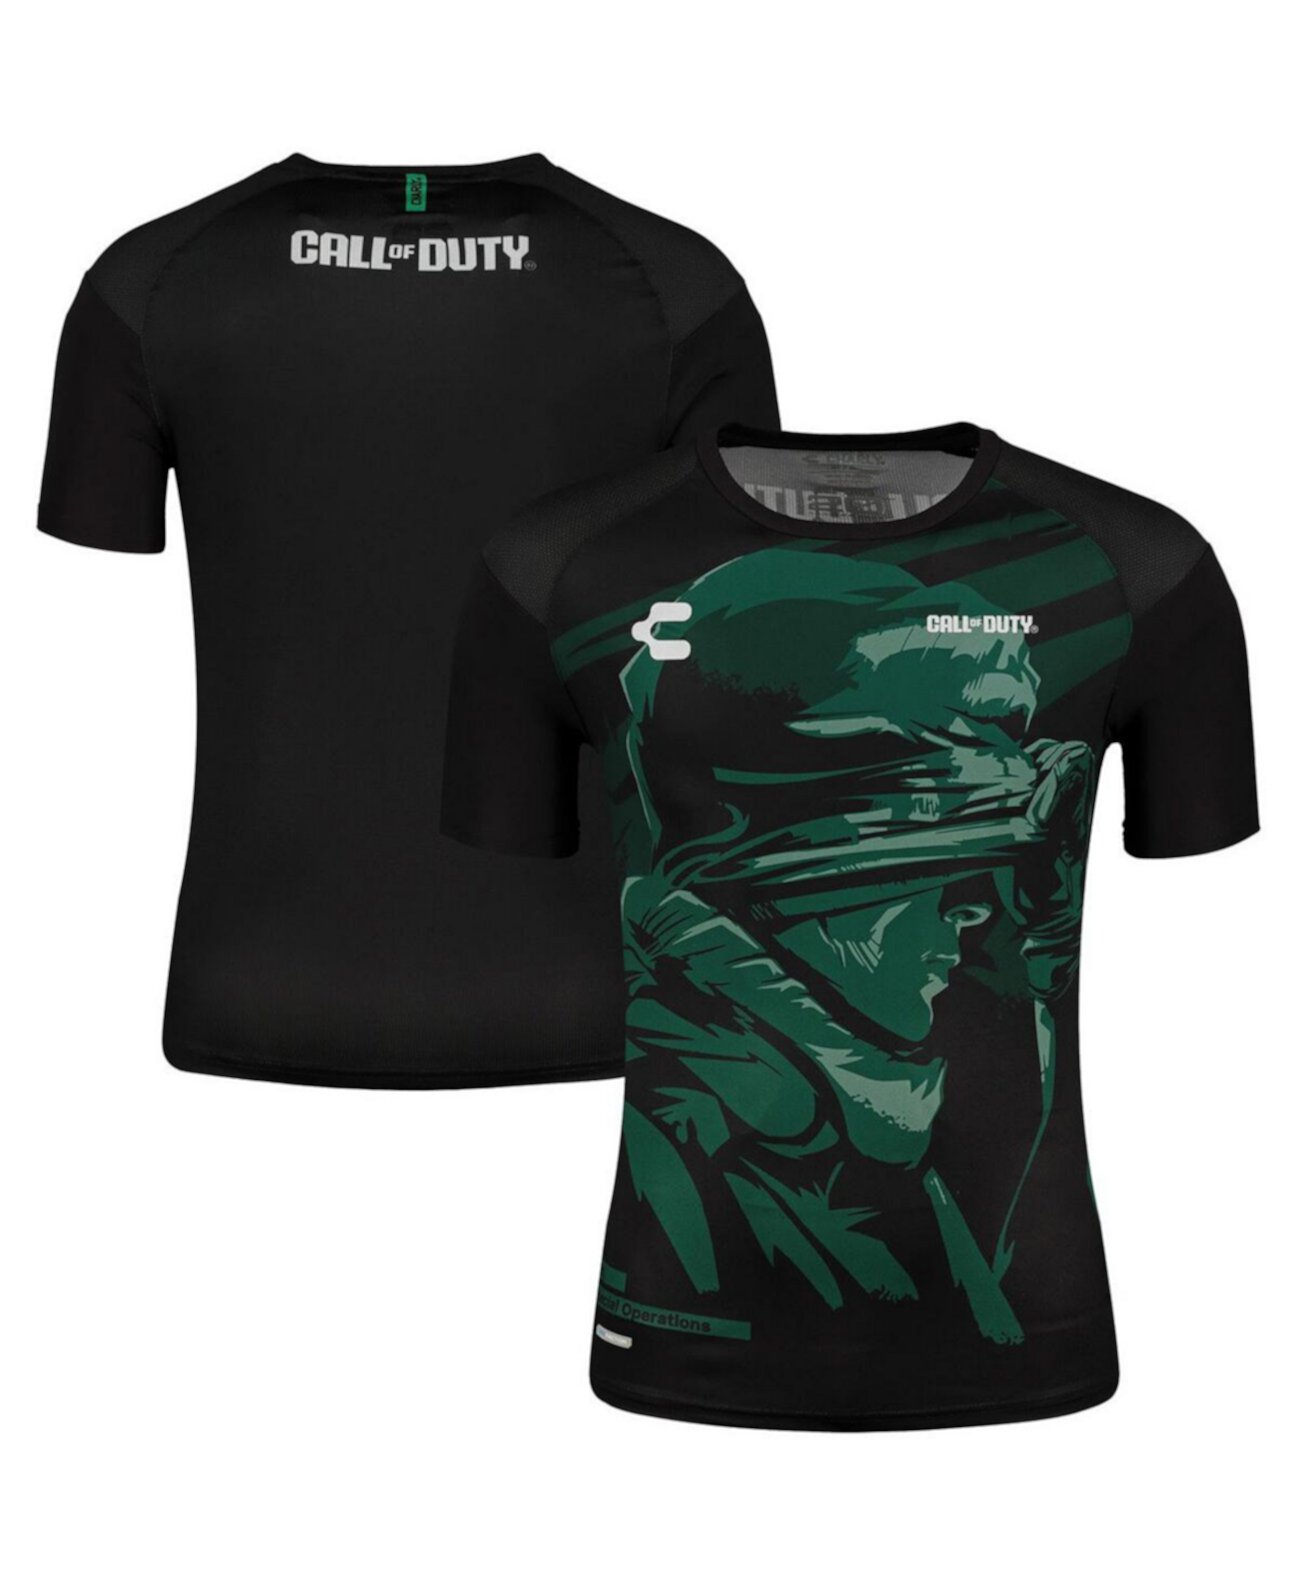 Men's Black, Green Call of Duty DRY FACTOR Training T-shirt CHARLY